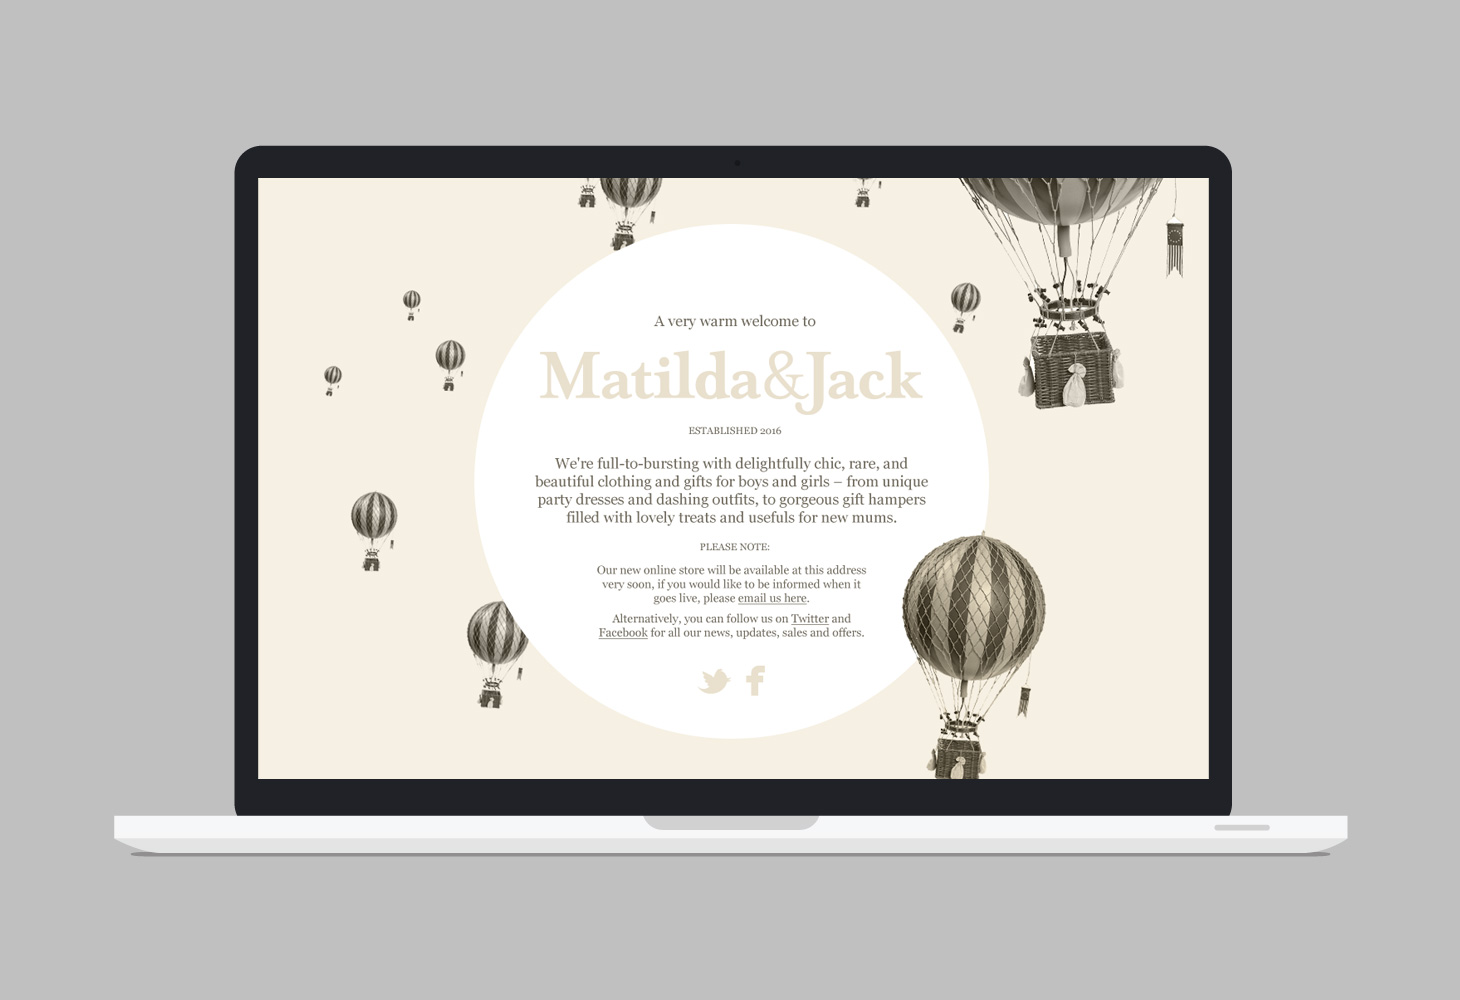 Matilda & Jack - Website - Landing page welcome